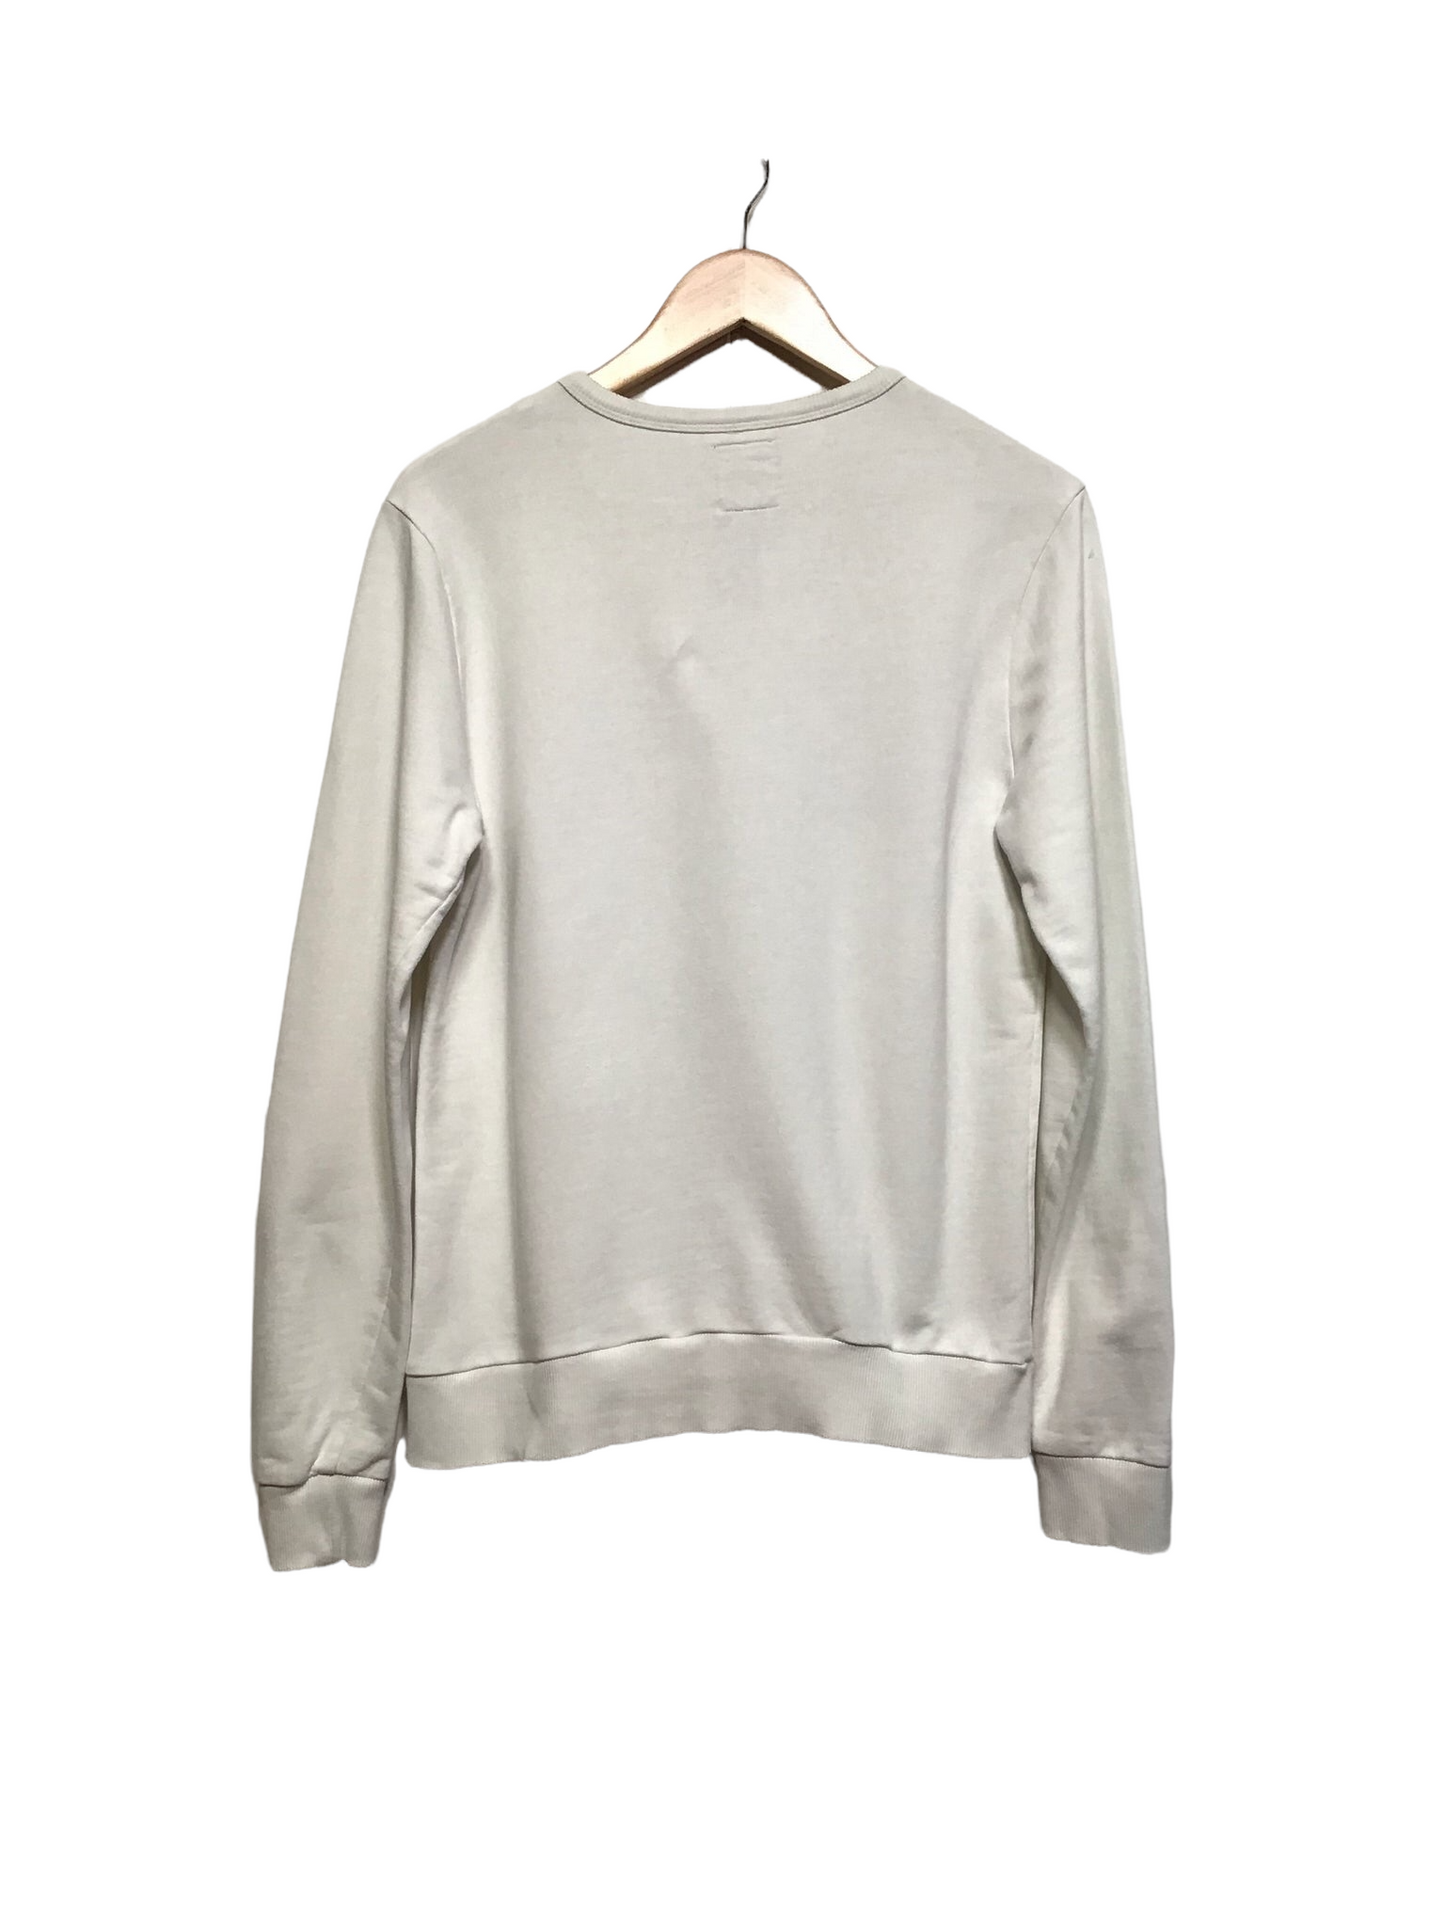 Levi’s Sweatshirt (Size M)